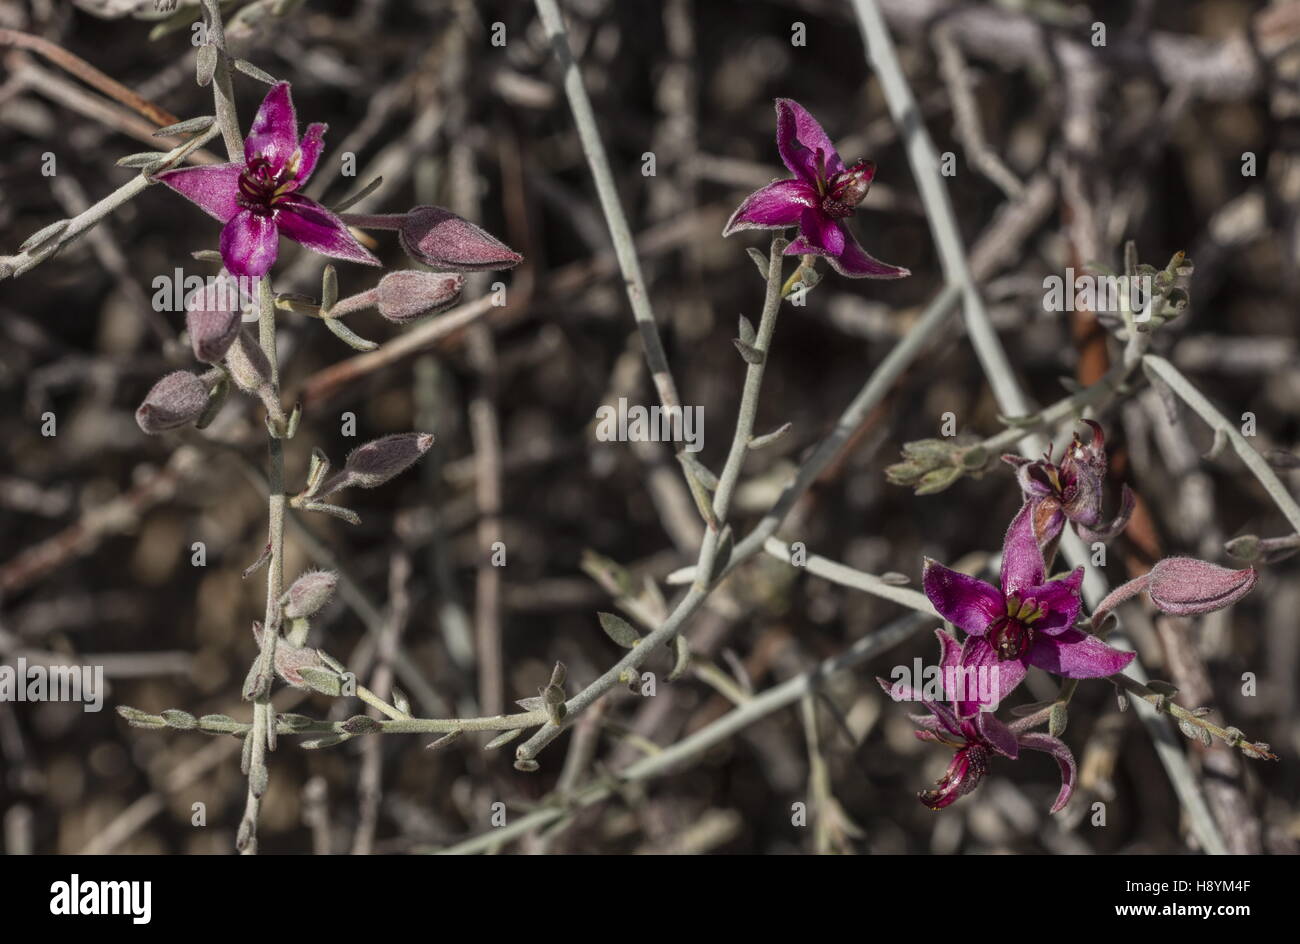 Pima rhatany, Krameria erecta in flower,  Sonoran Desert, California. Stock Photo